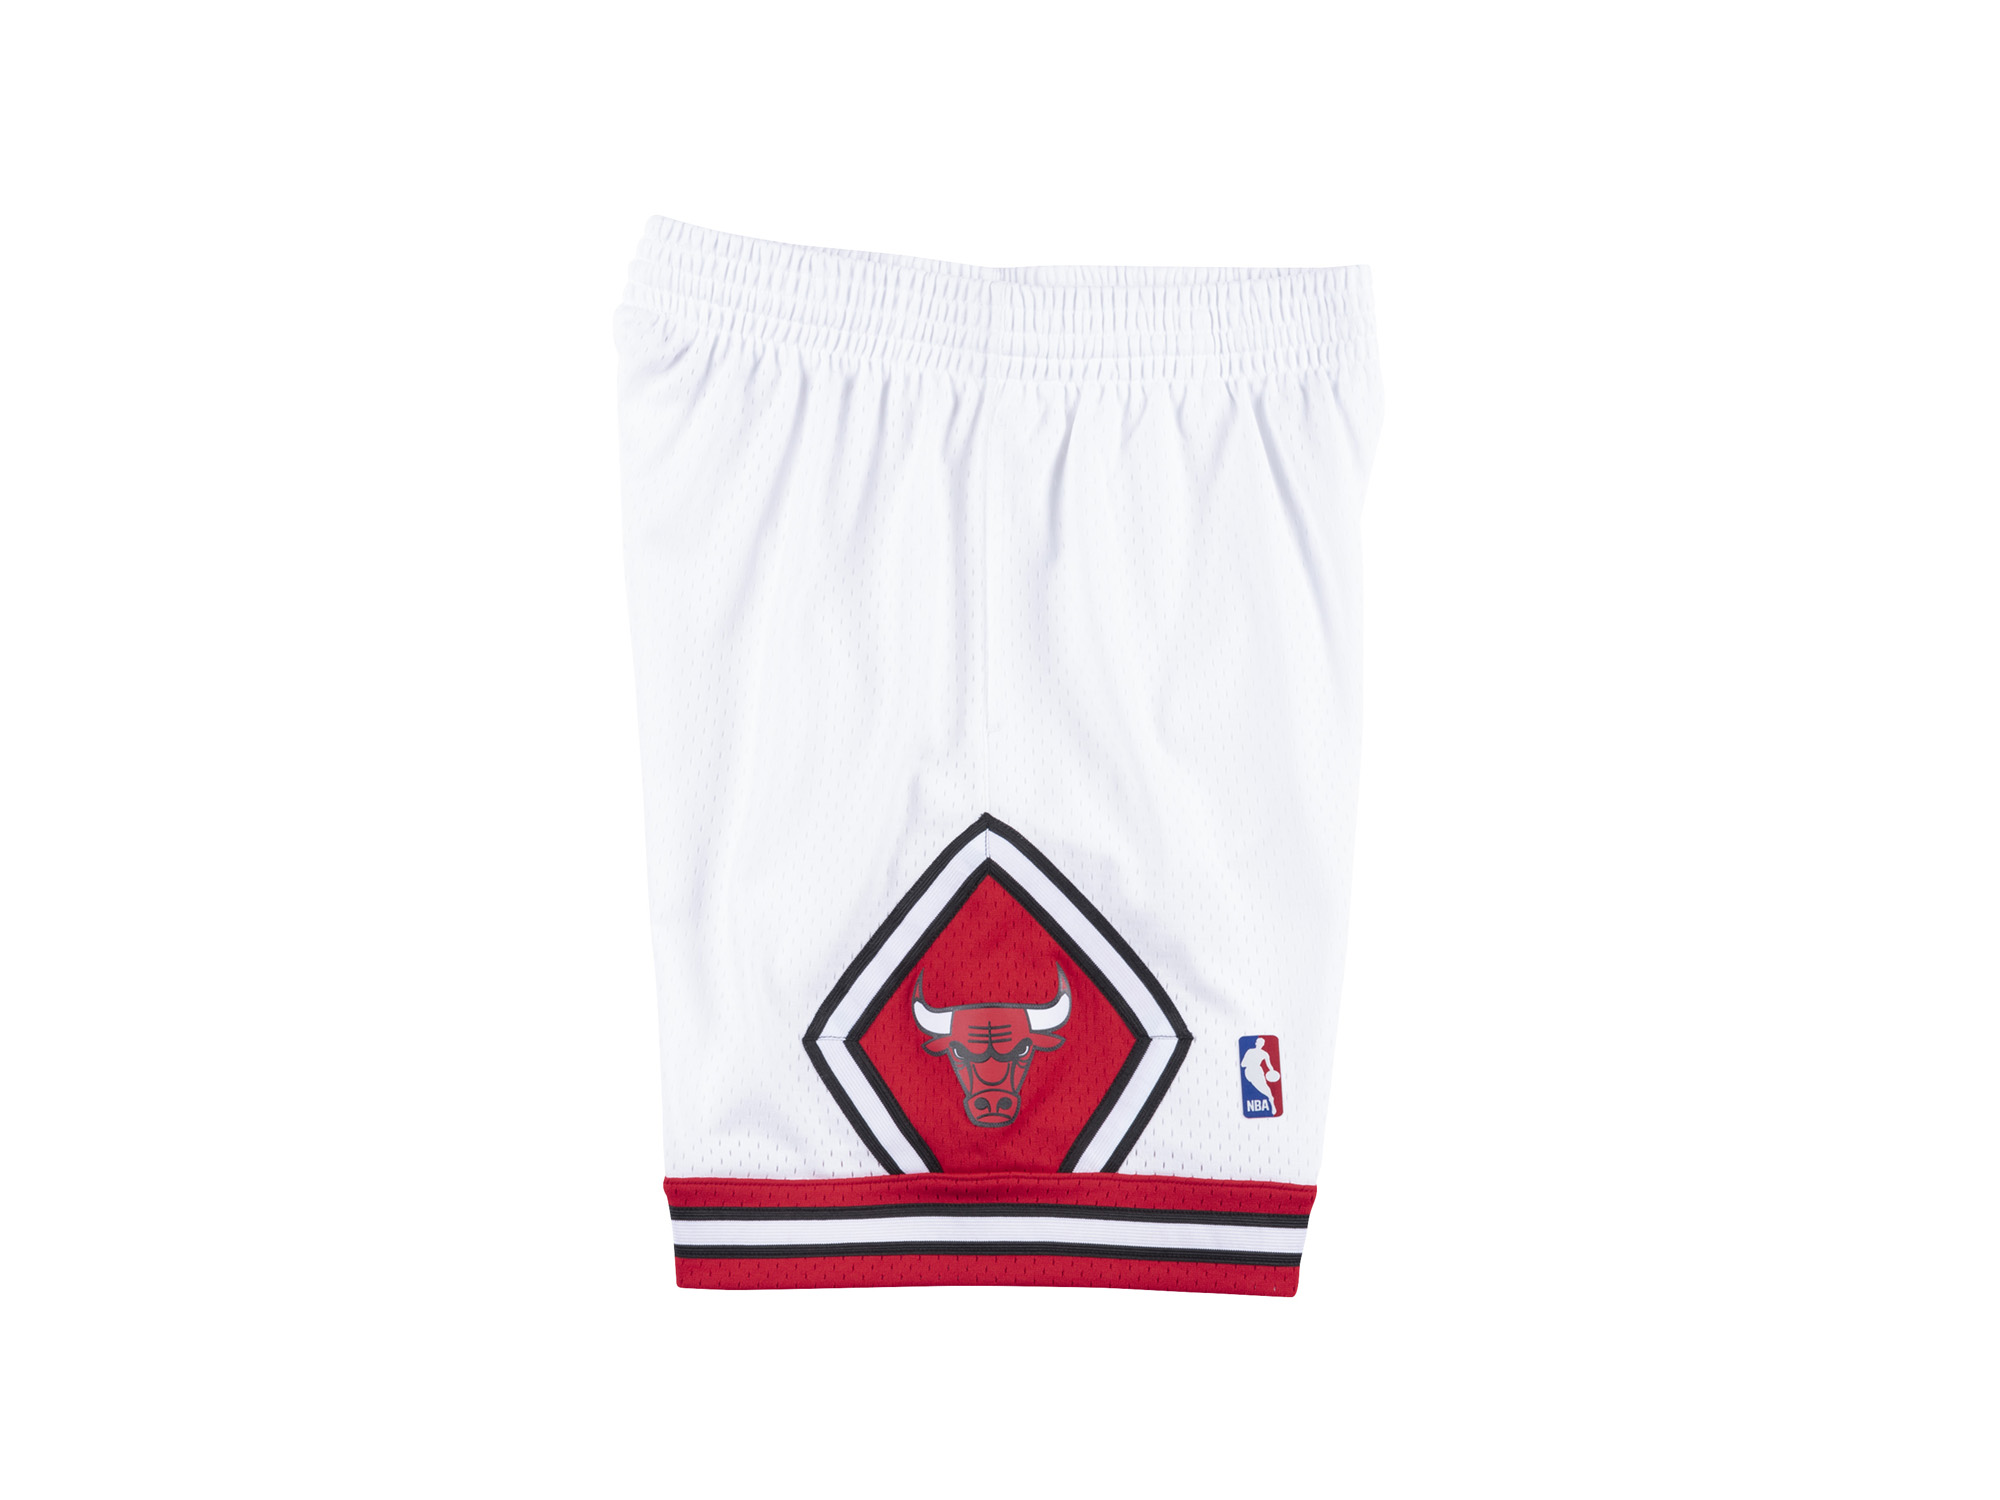 Mitchell & Ness Chicago Bulls NBA Classic Swingman Shorts